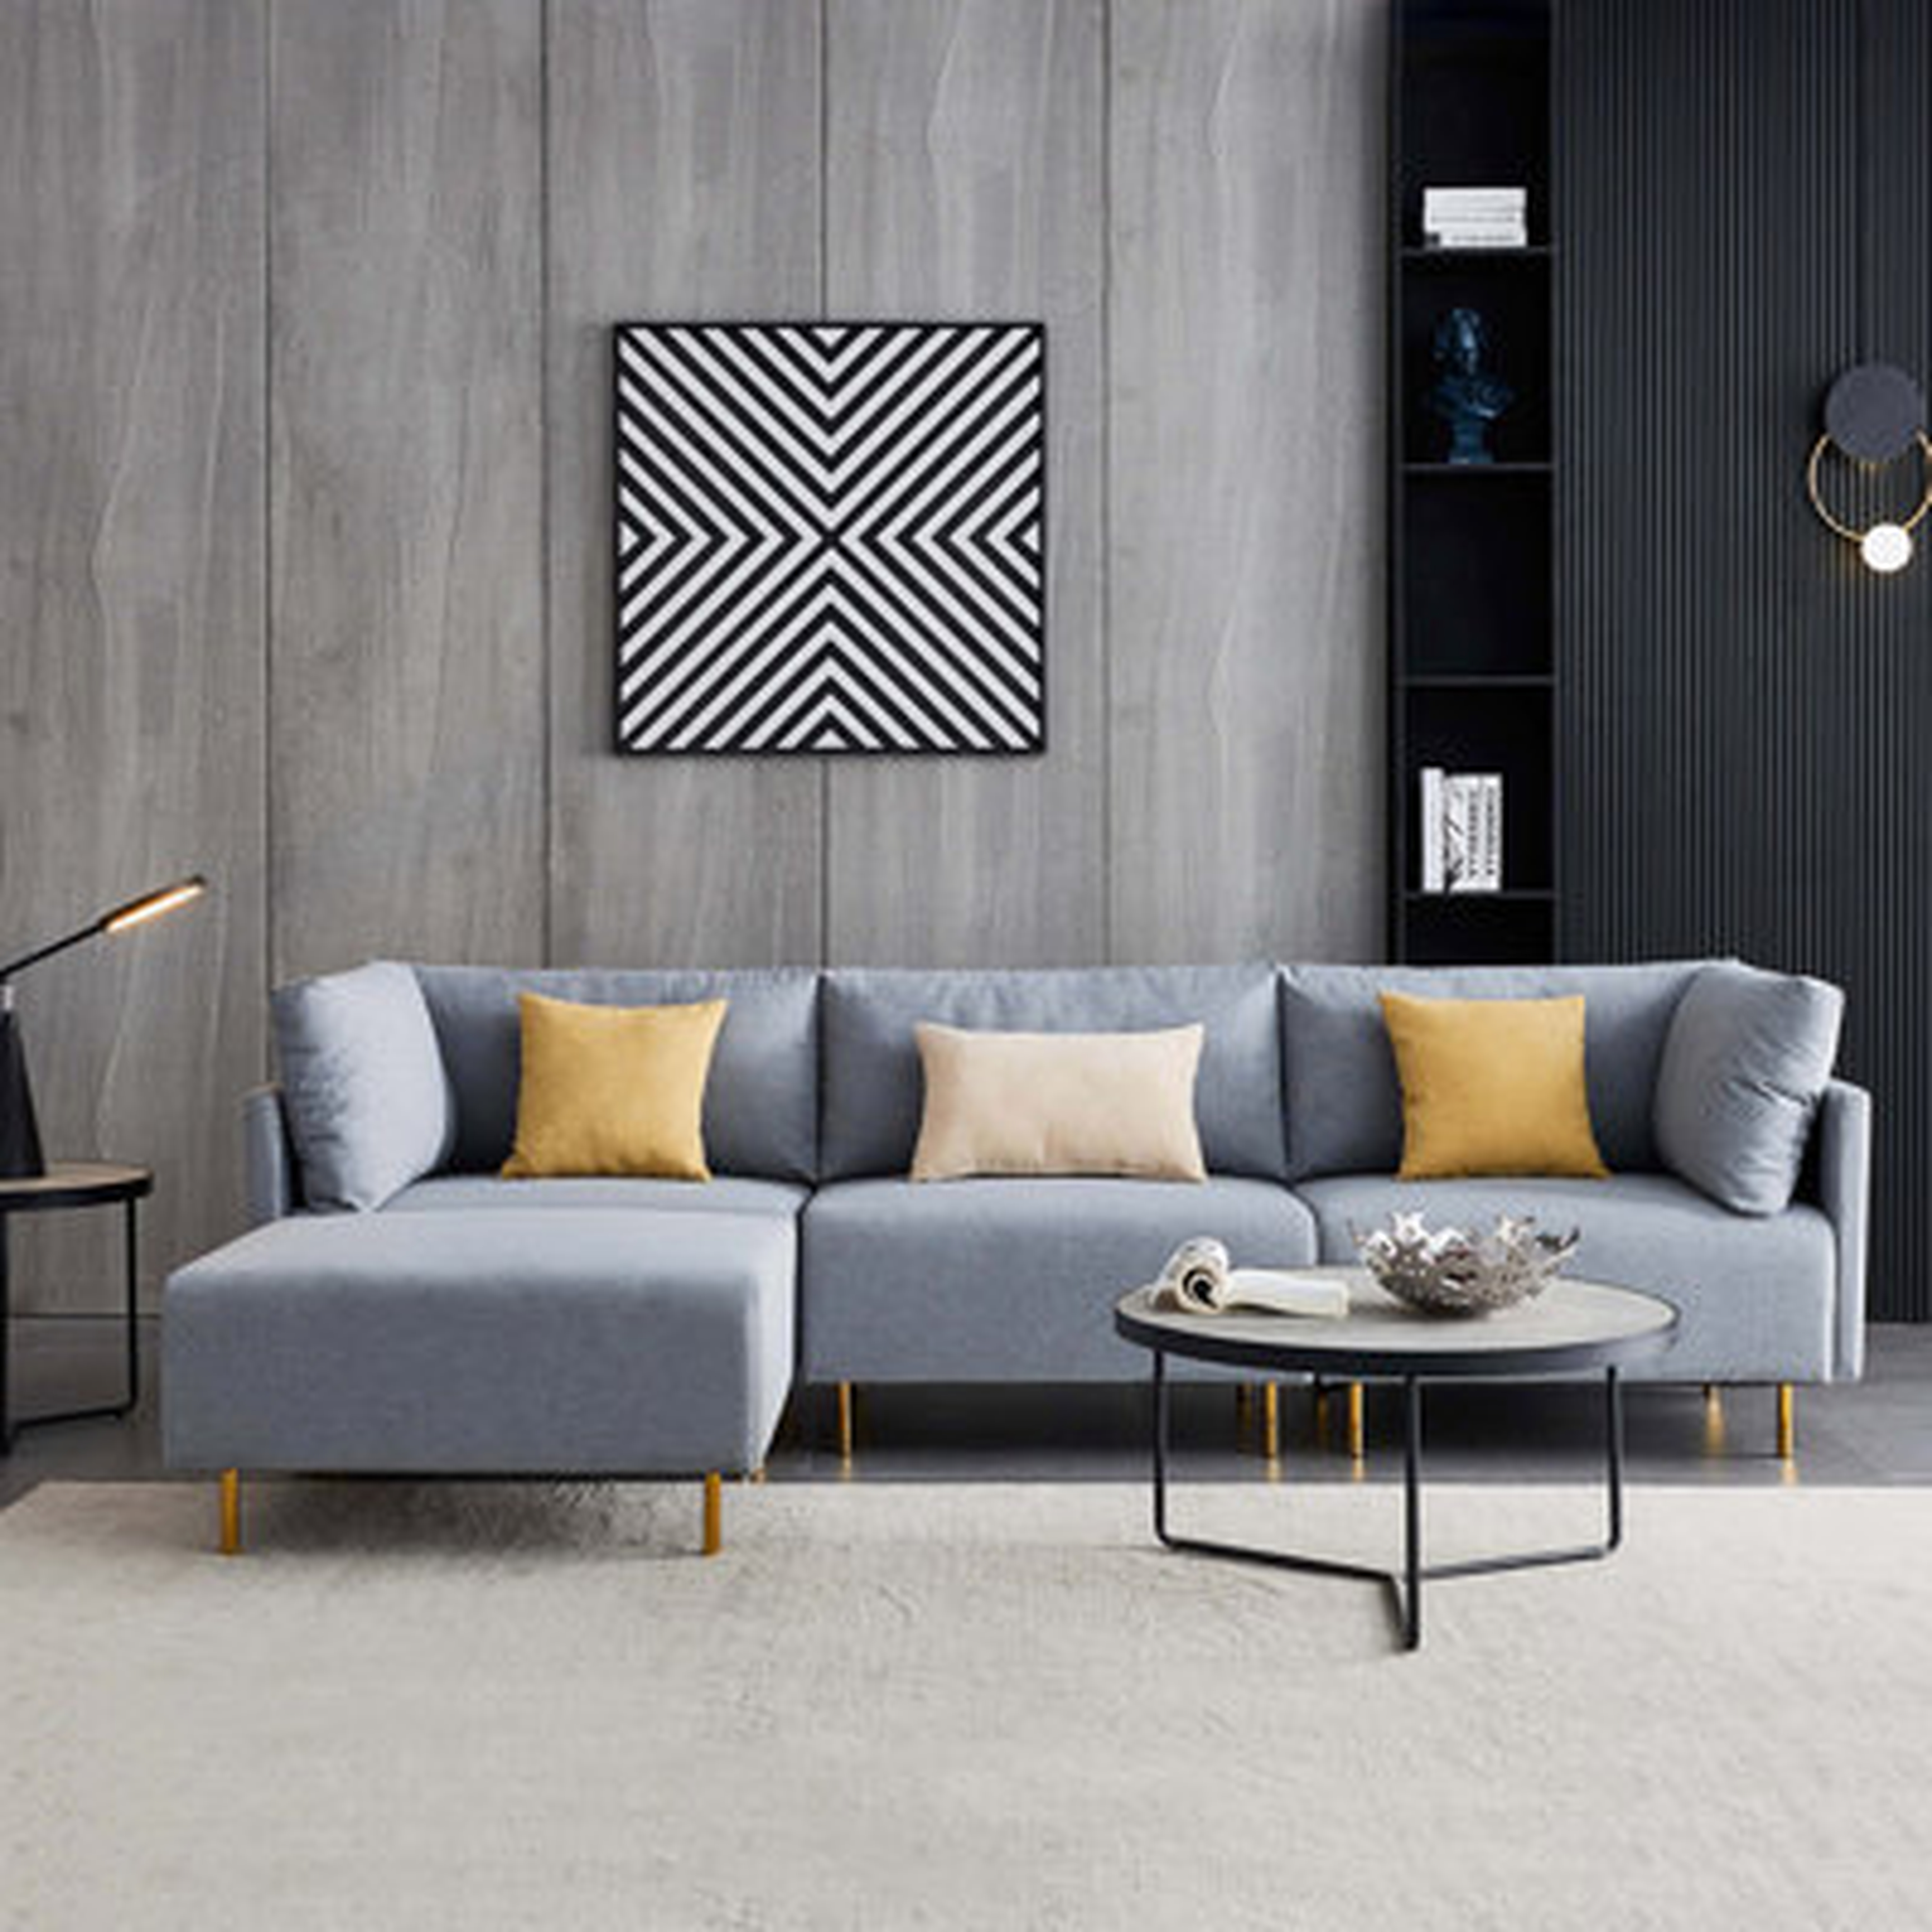 Comfortable Sectional Sofa - Wayfair